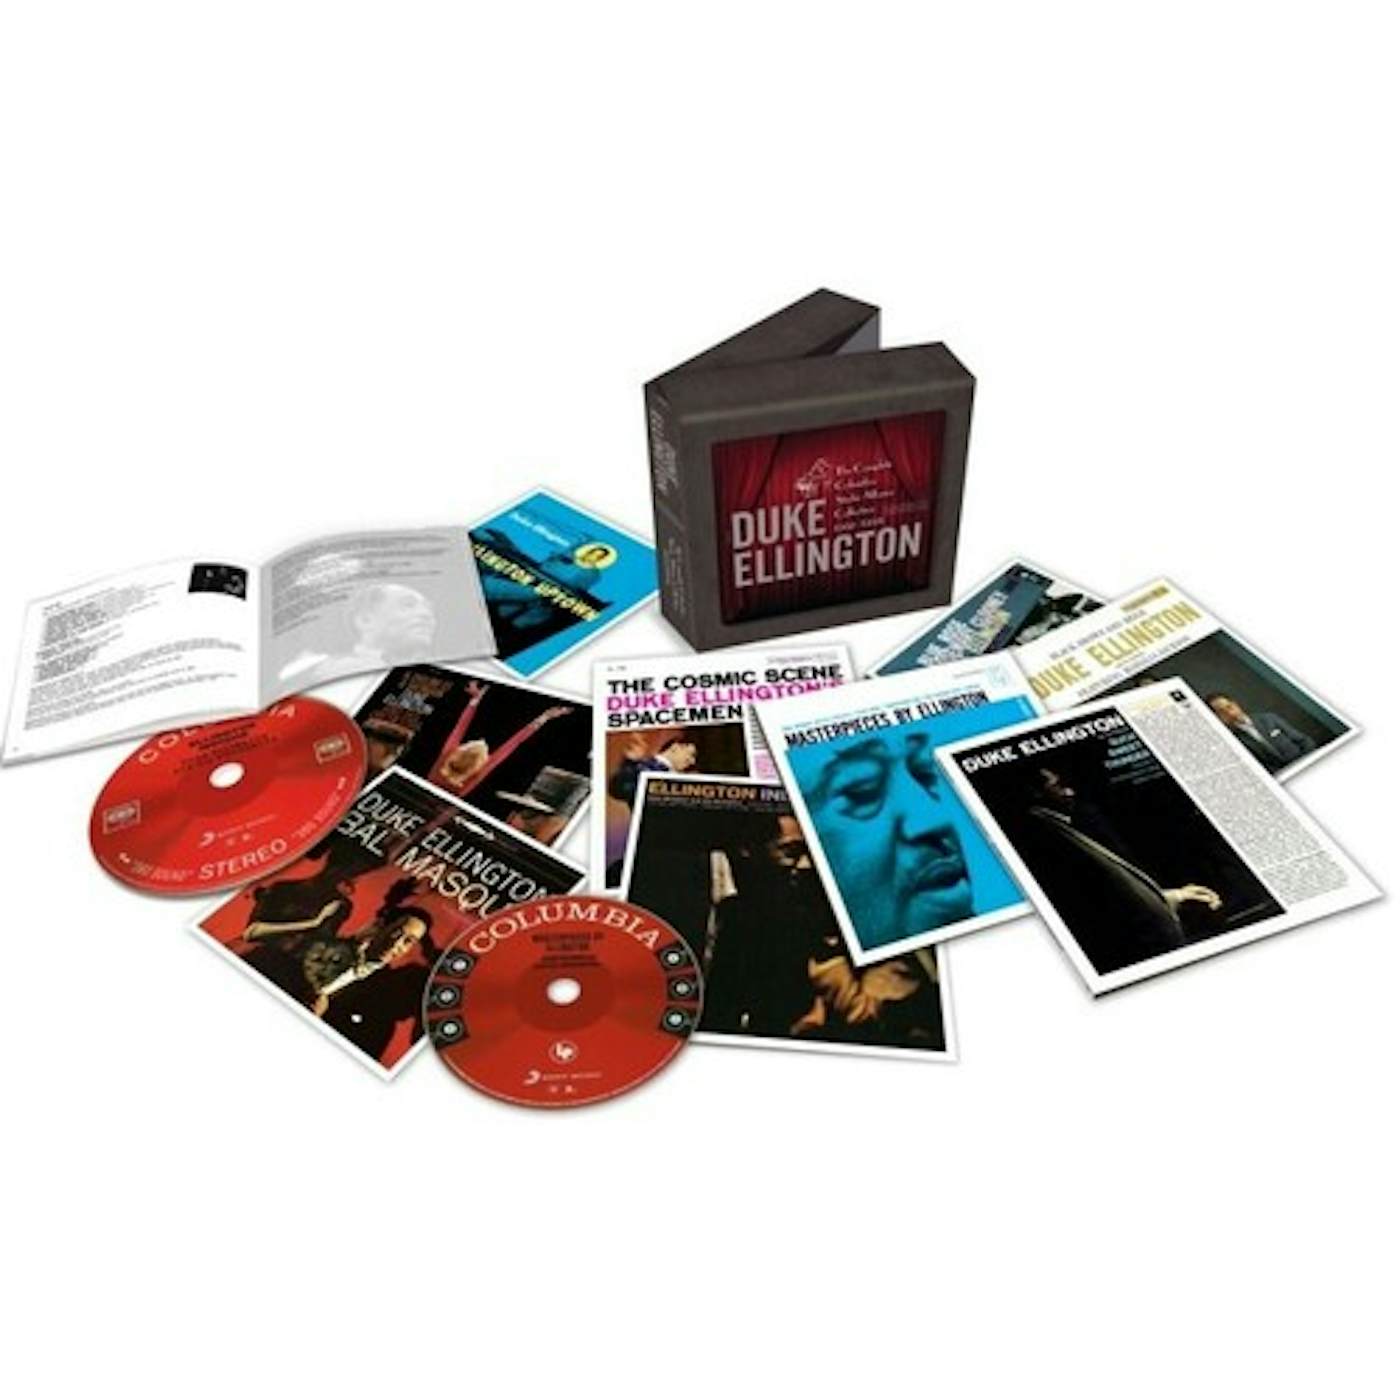 Duke Ellington COMPLETE COLUMBIA STUDIO ALBUMS COLLECTION 1951-58 CD